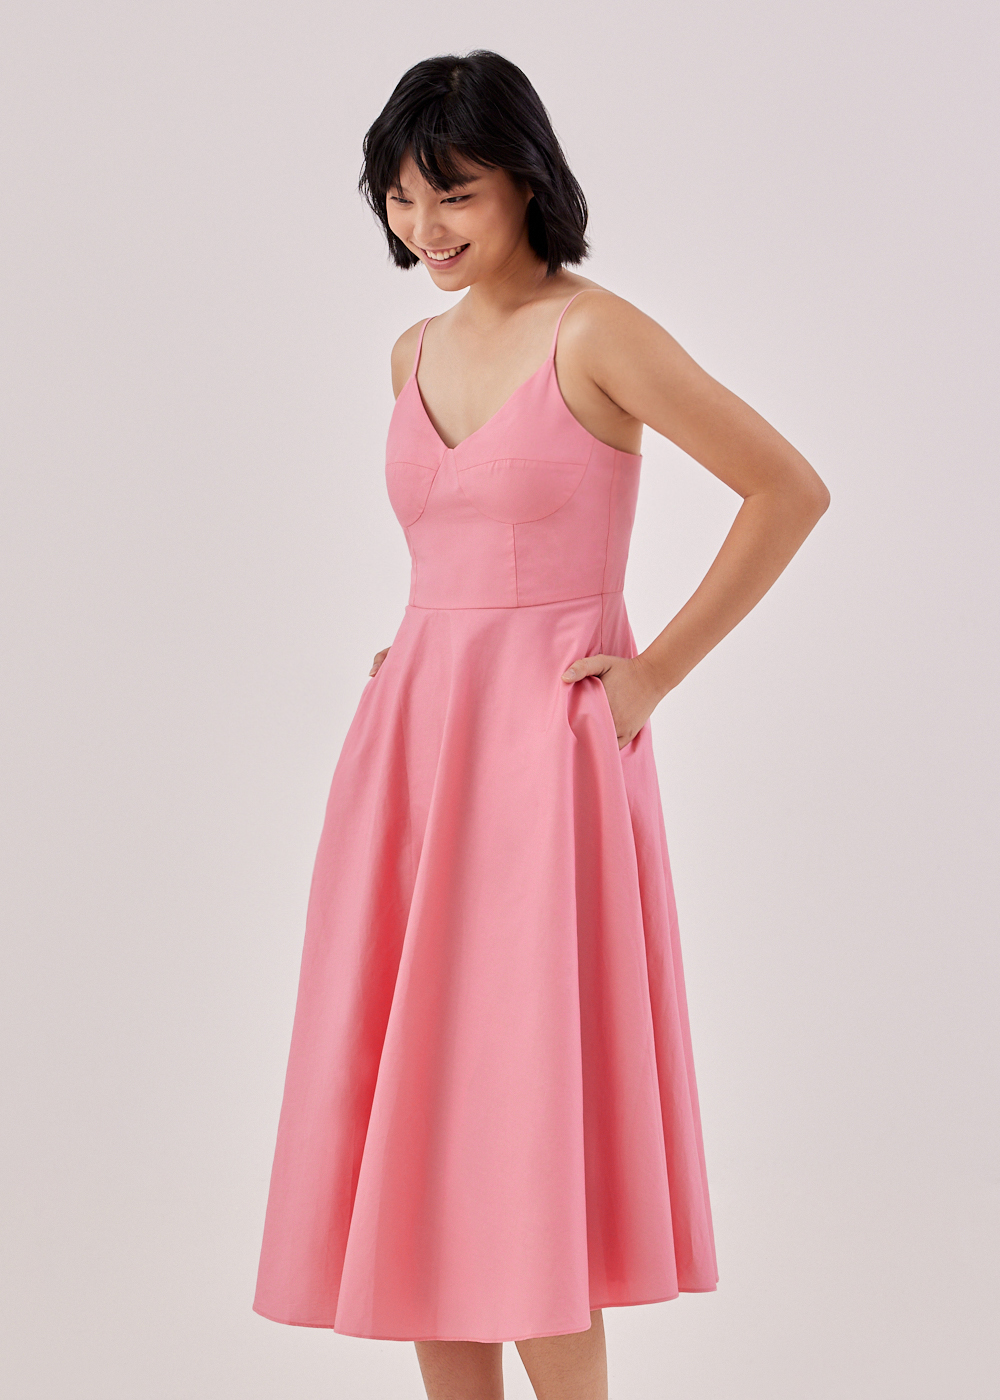 Buy Kalysta Padded Bustier Fit & Flare Dress @ Love, Bonito Singapore ...